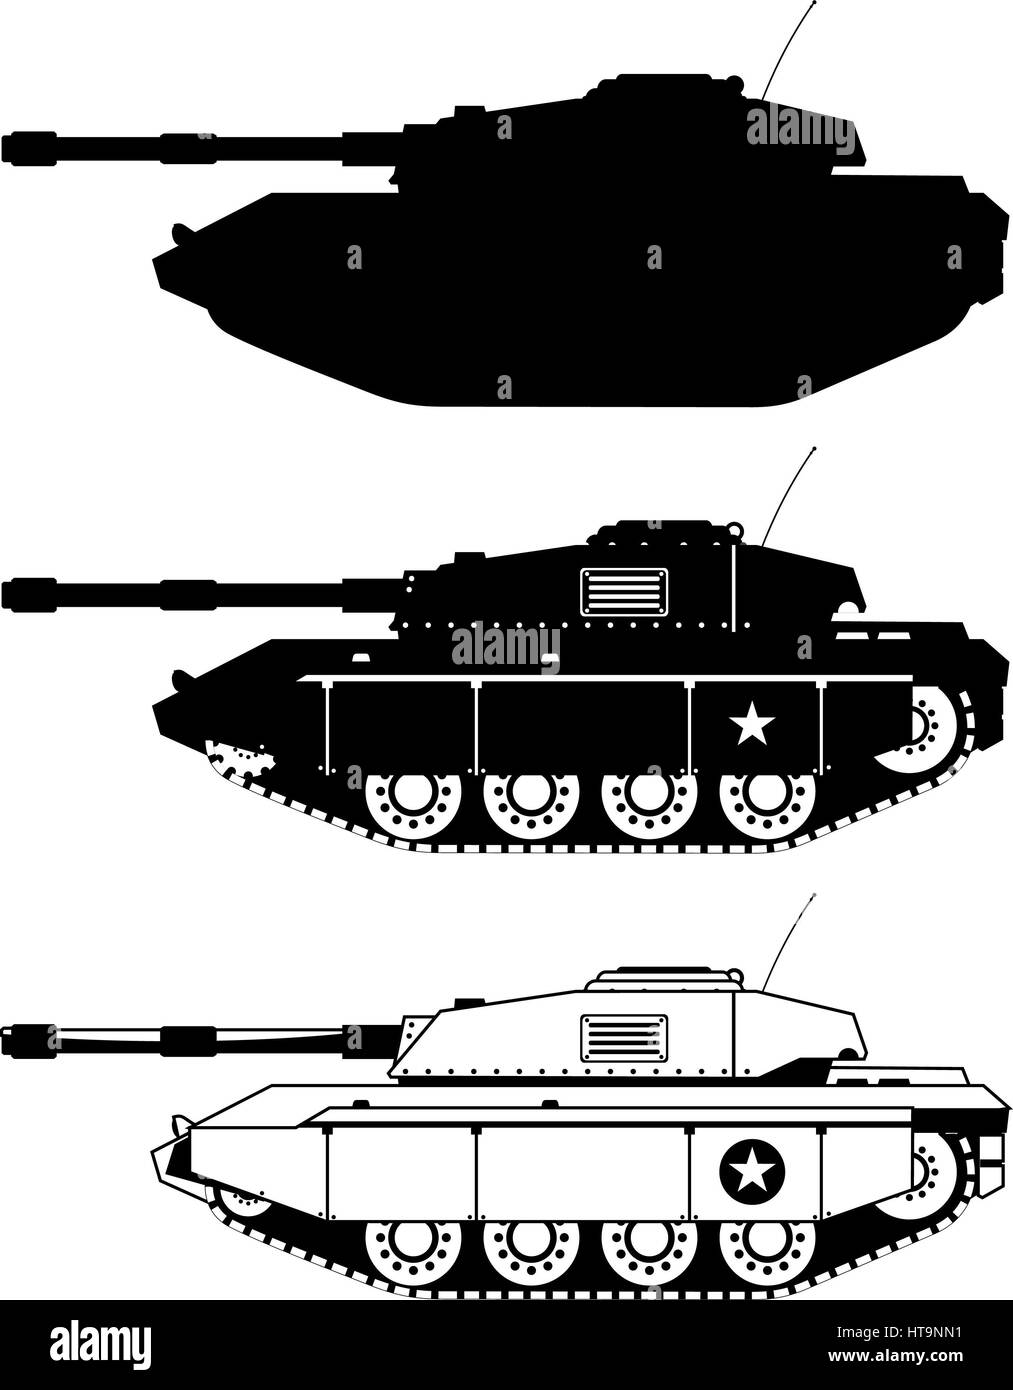 Tank military icons vector illustration. Stock Photo